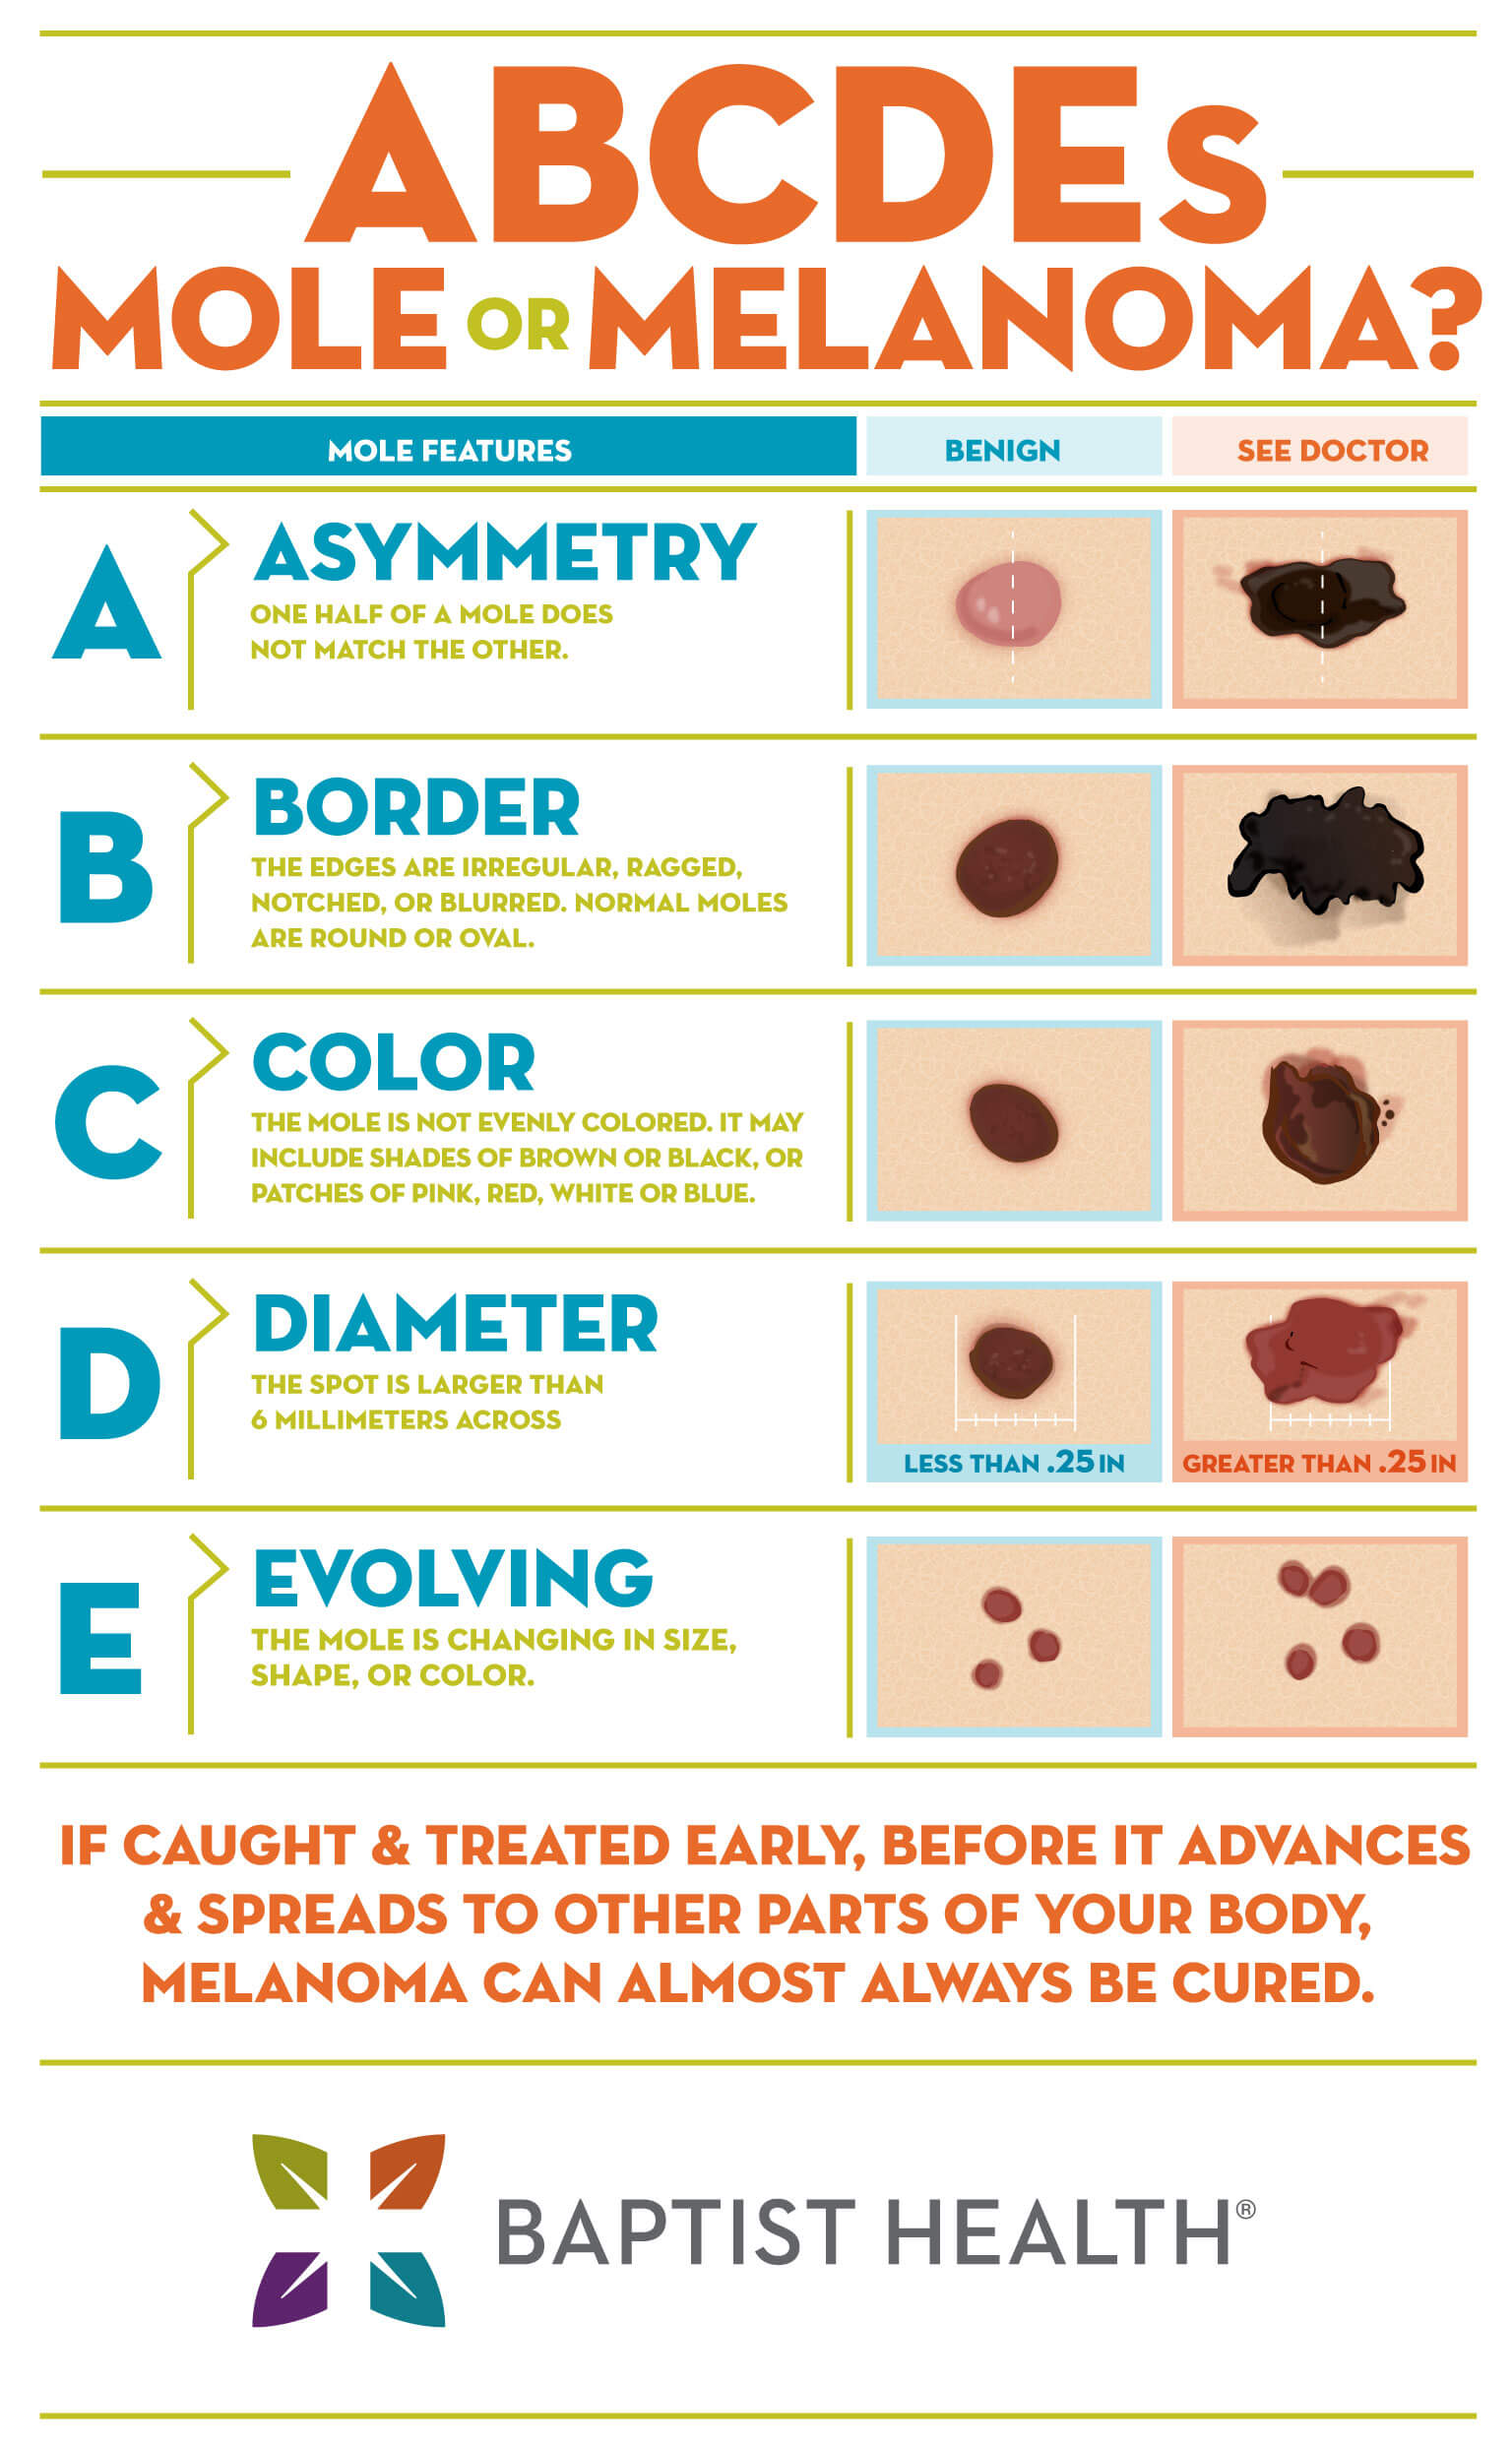 ABCDE's of melanoma